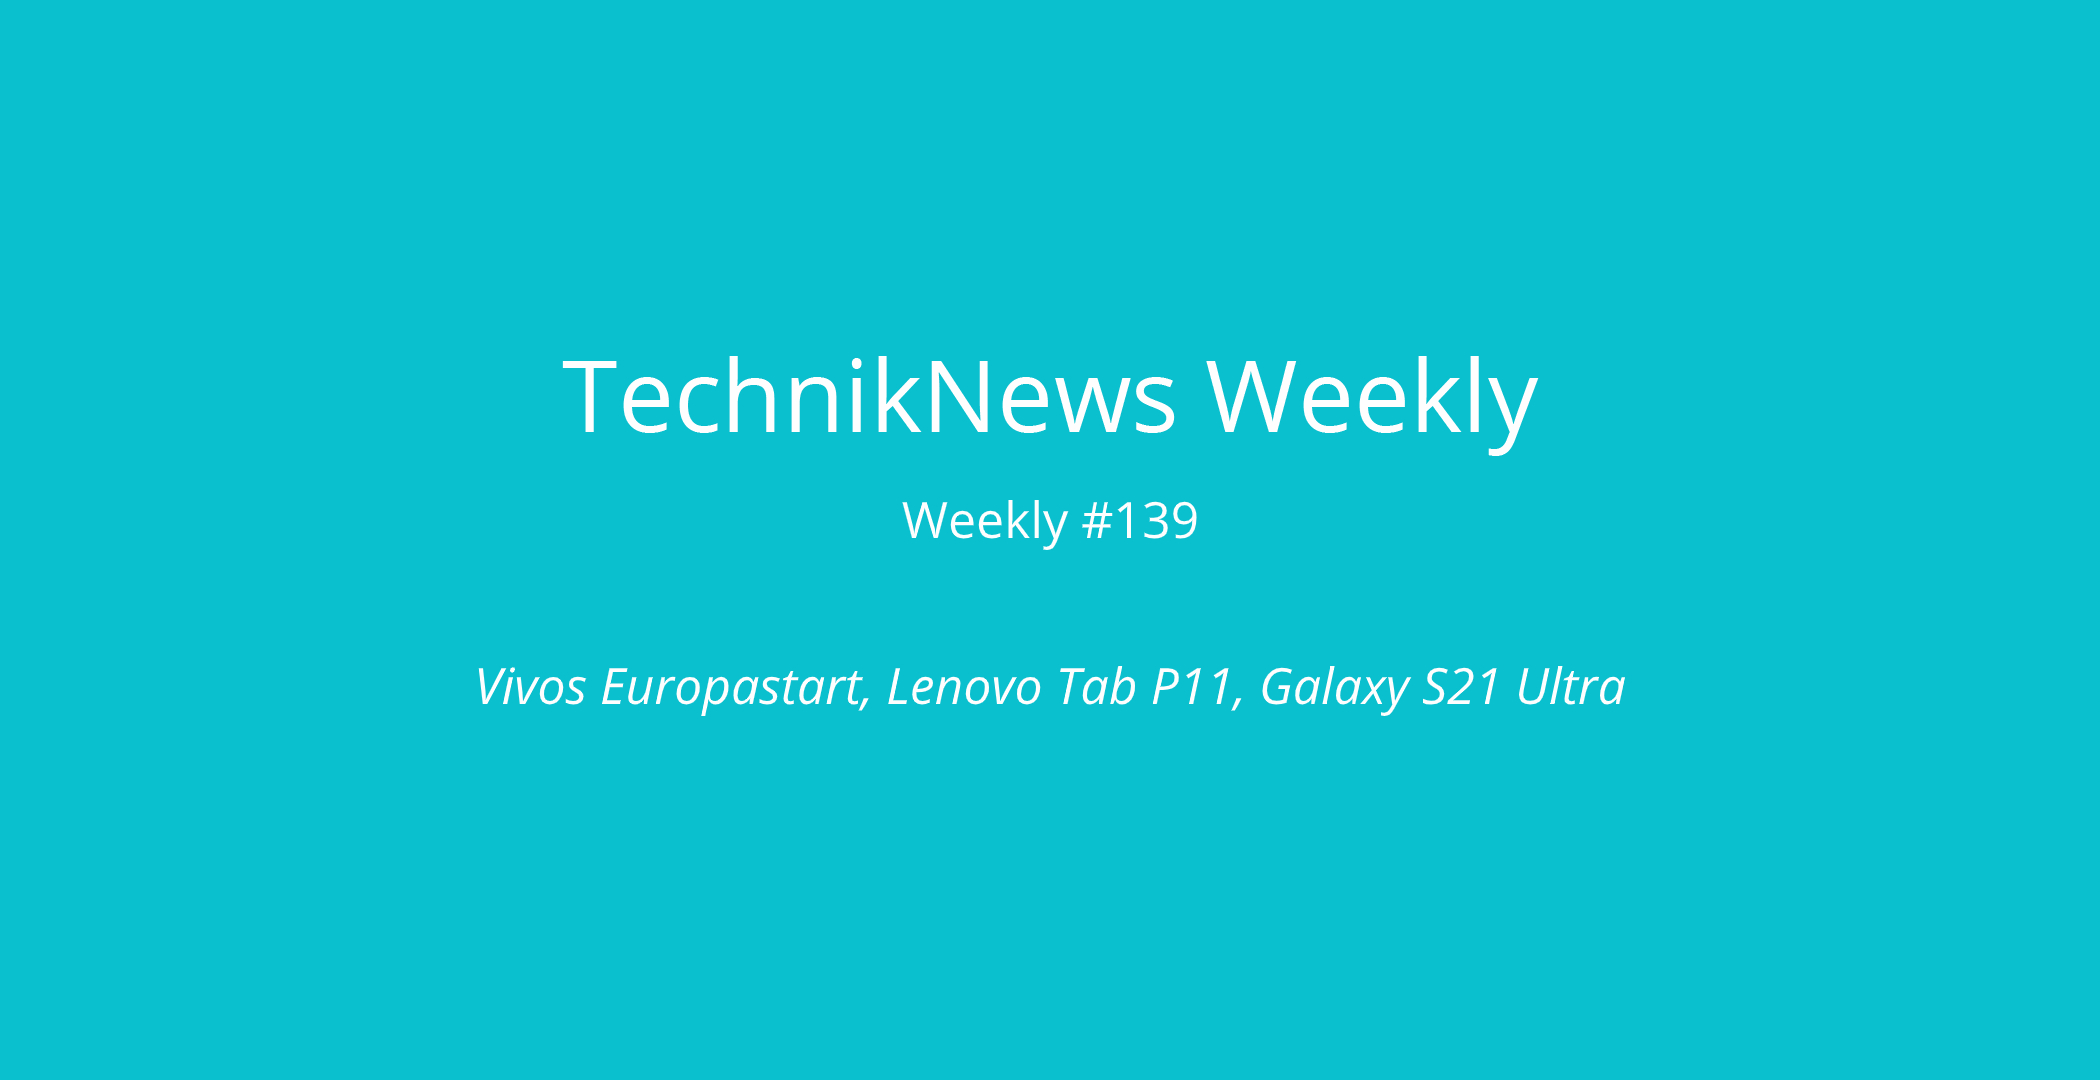 TechnikNews Weekly # 139 featured image